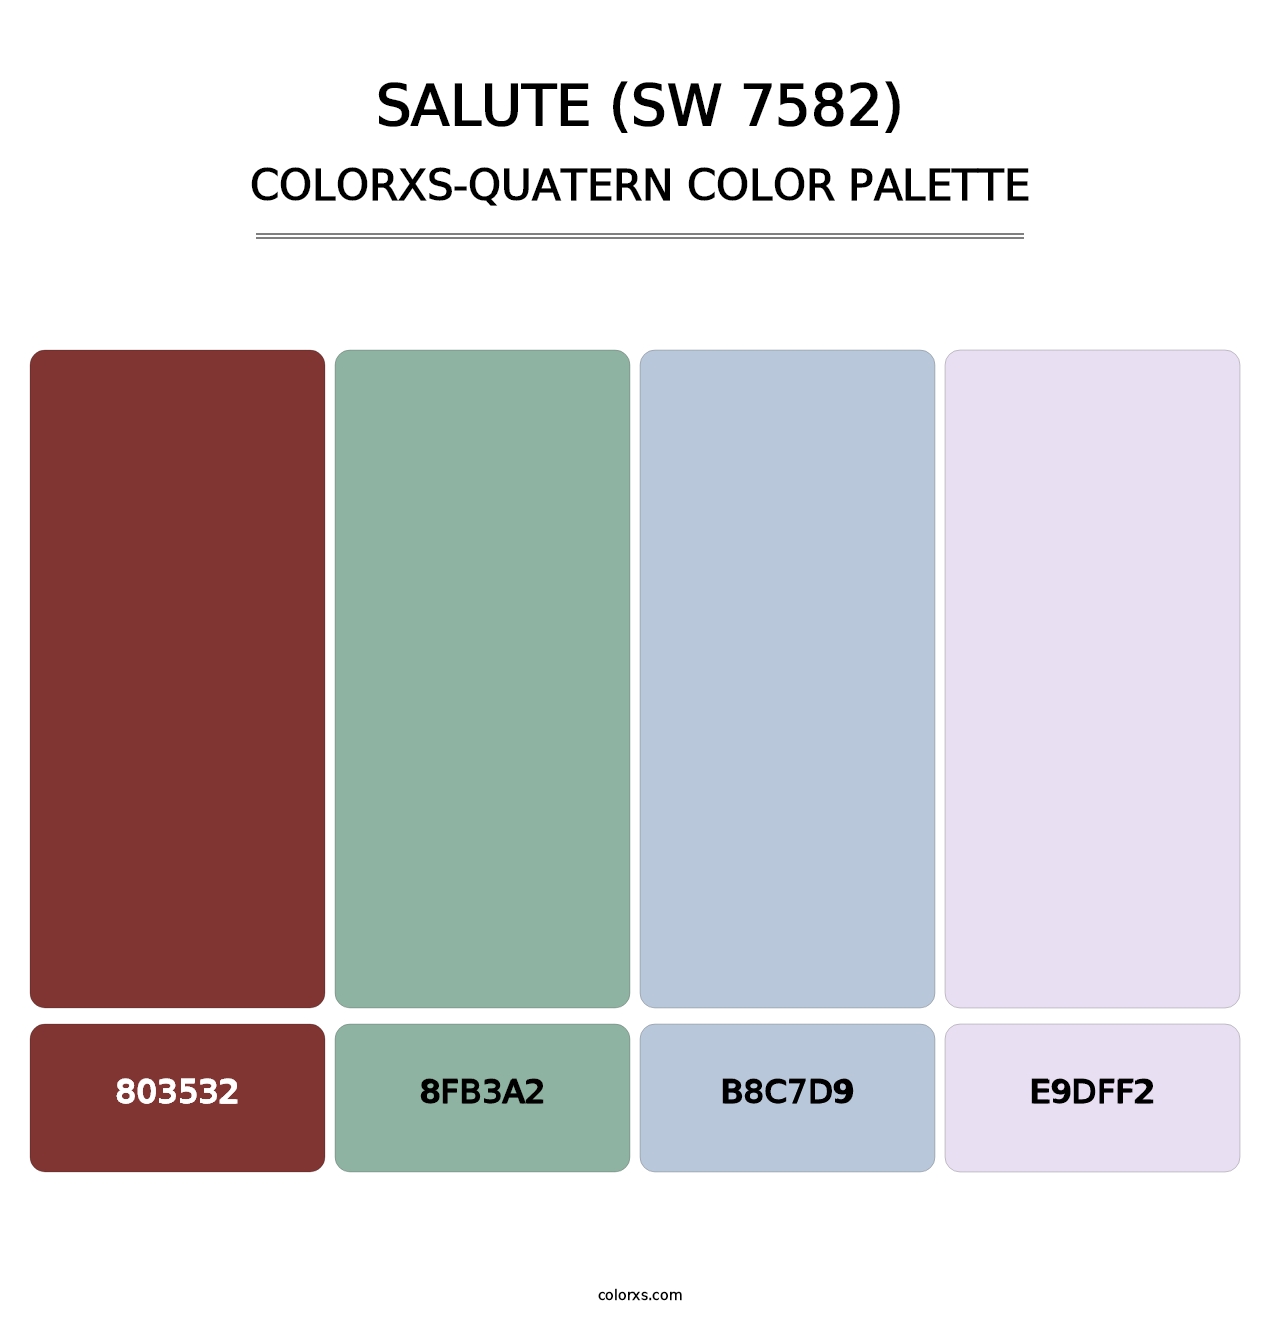 Salute (SW 7582) - Colorxs Quatern Palette